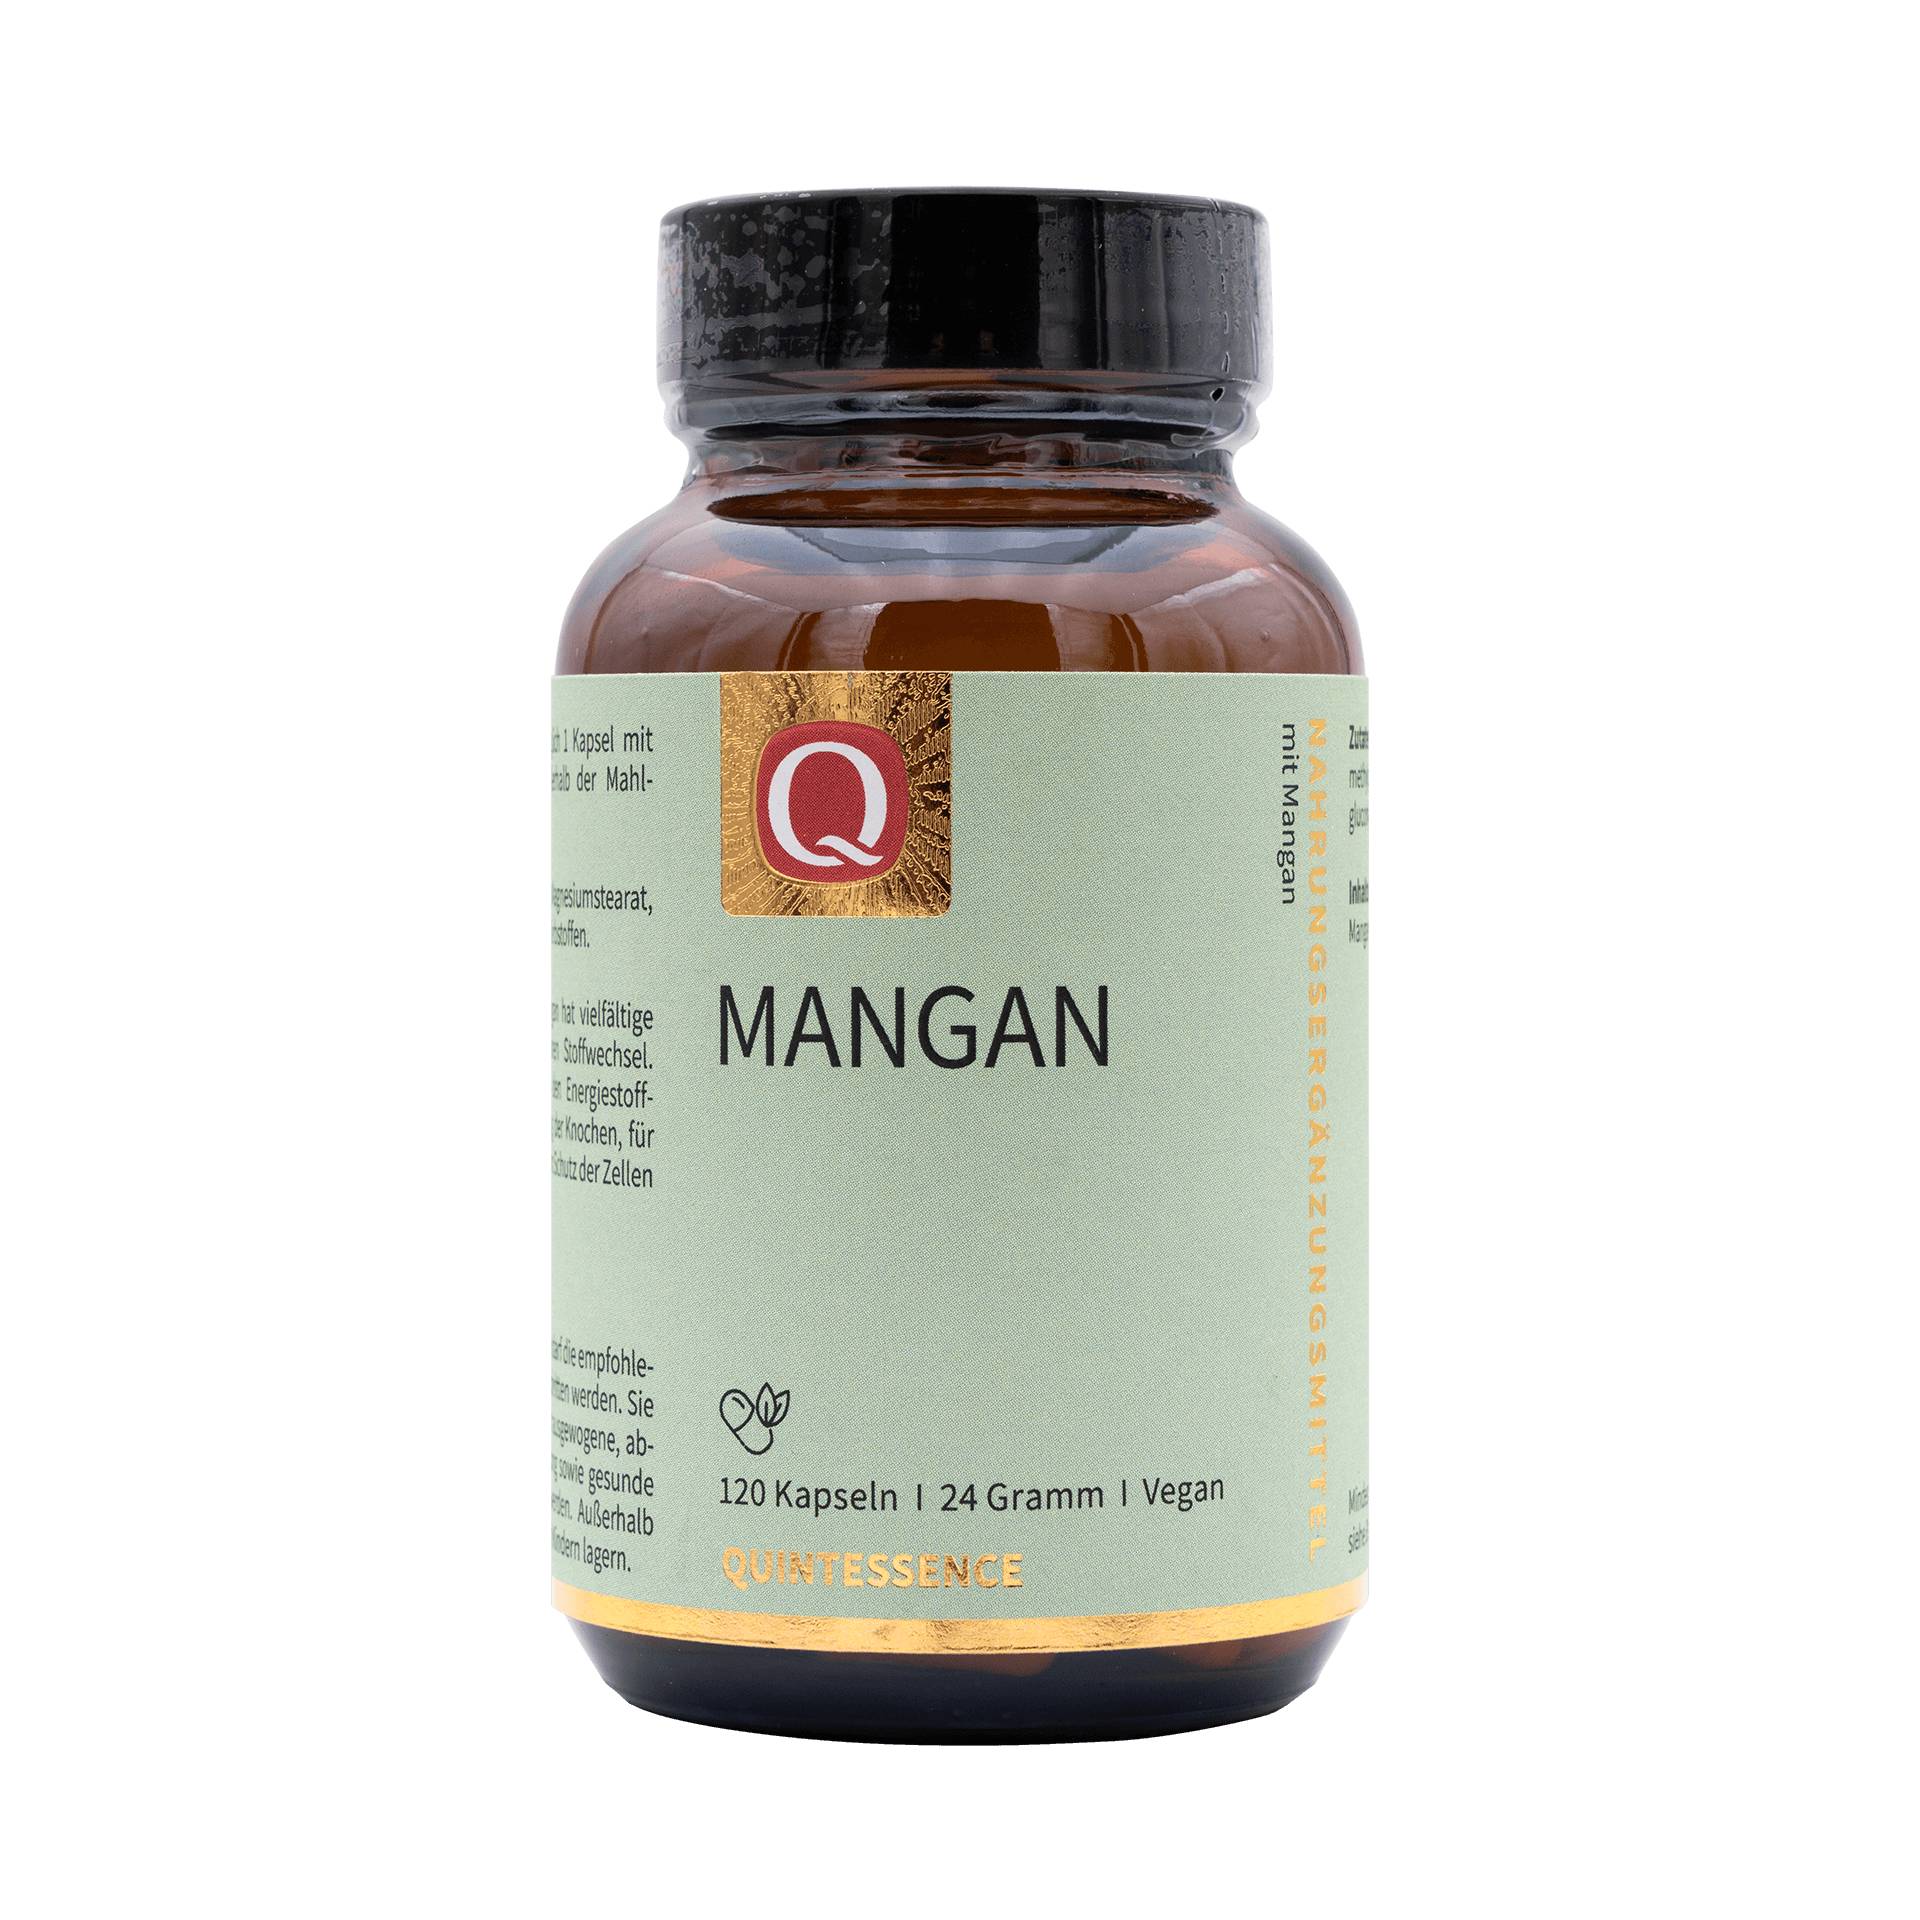 Mangan 120 Kapseln - 5 mg Mangan als Mangangluconat pro Kapsel - 100 Prozent Reinstoffqualität - Vegan - Quintessence von Quintessence